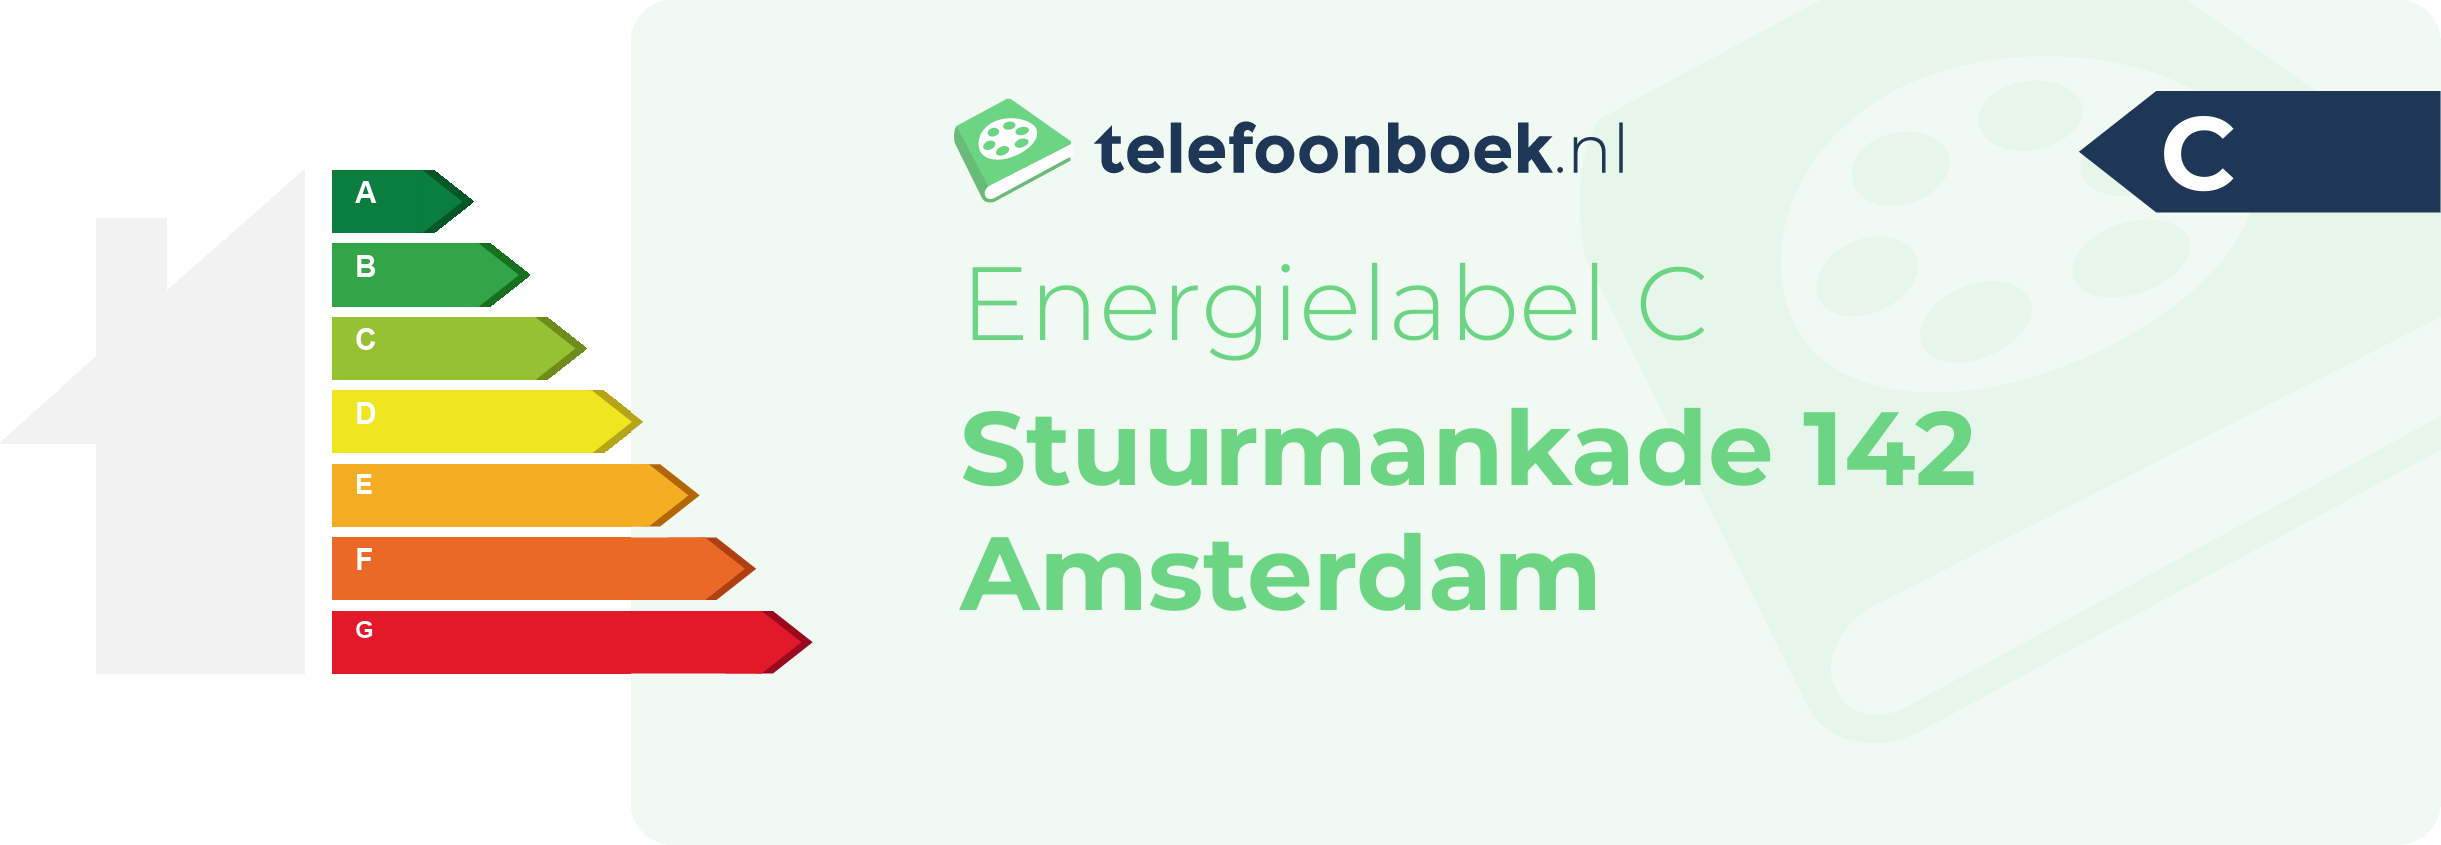 Energielabel Stuurmankade 142 Amsterdam